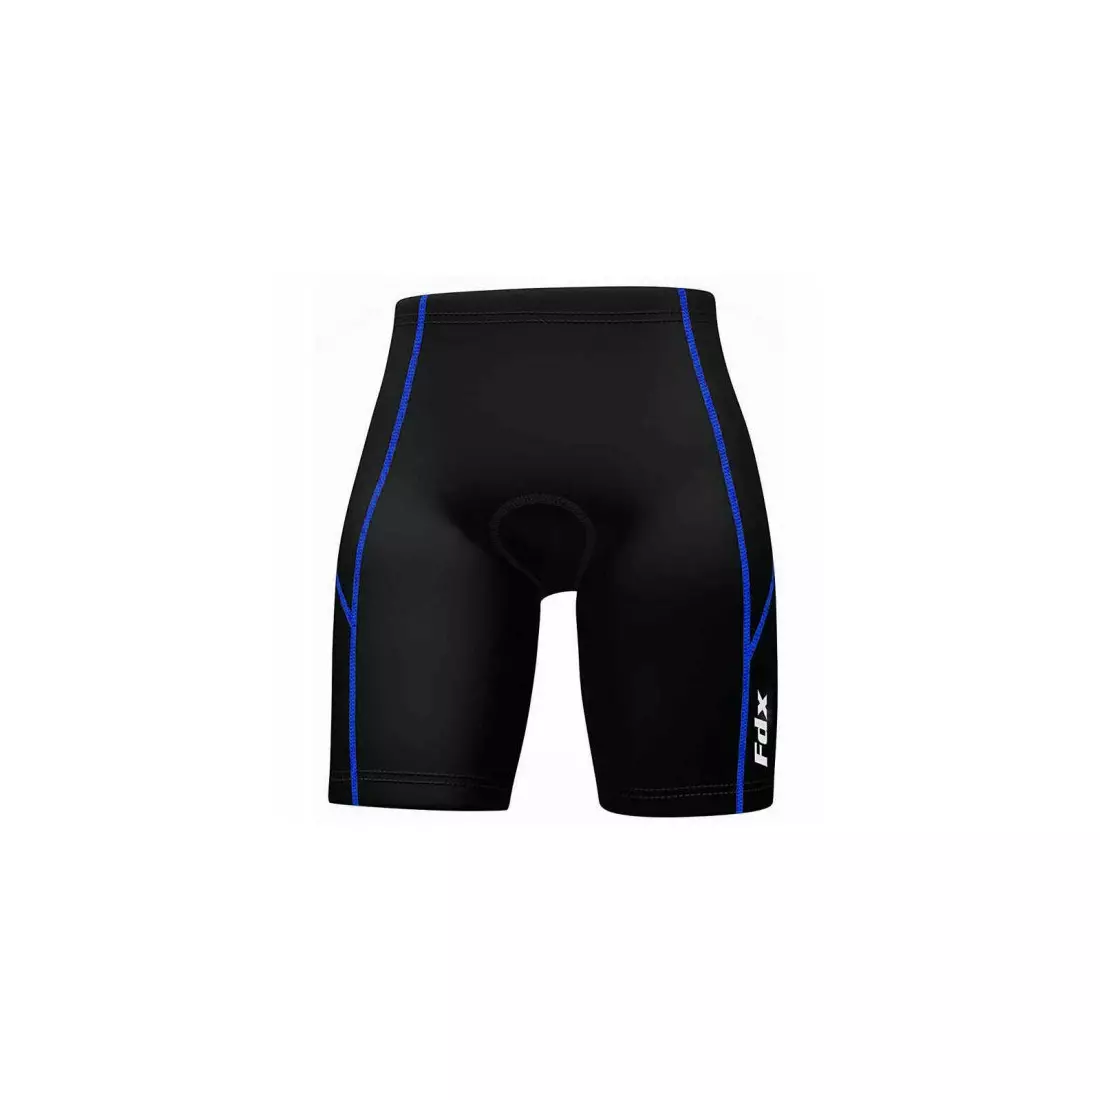 FDX 1600 men's cycling shorts, black - blue seam